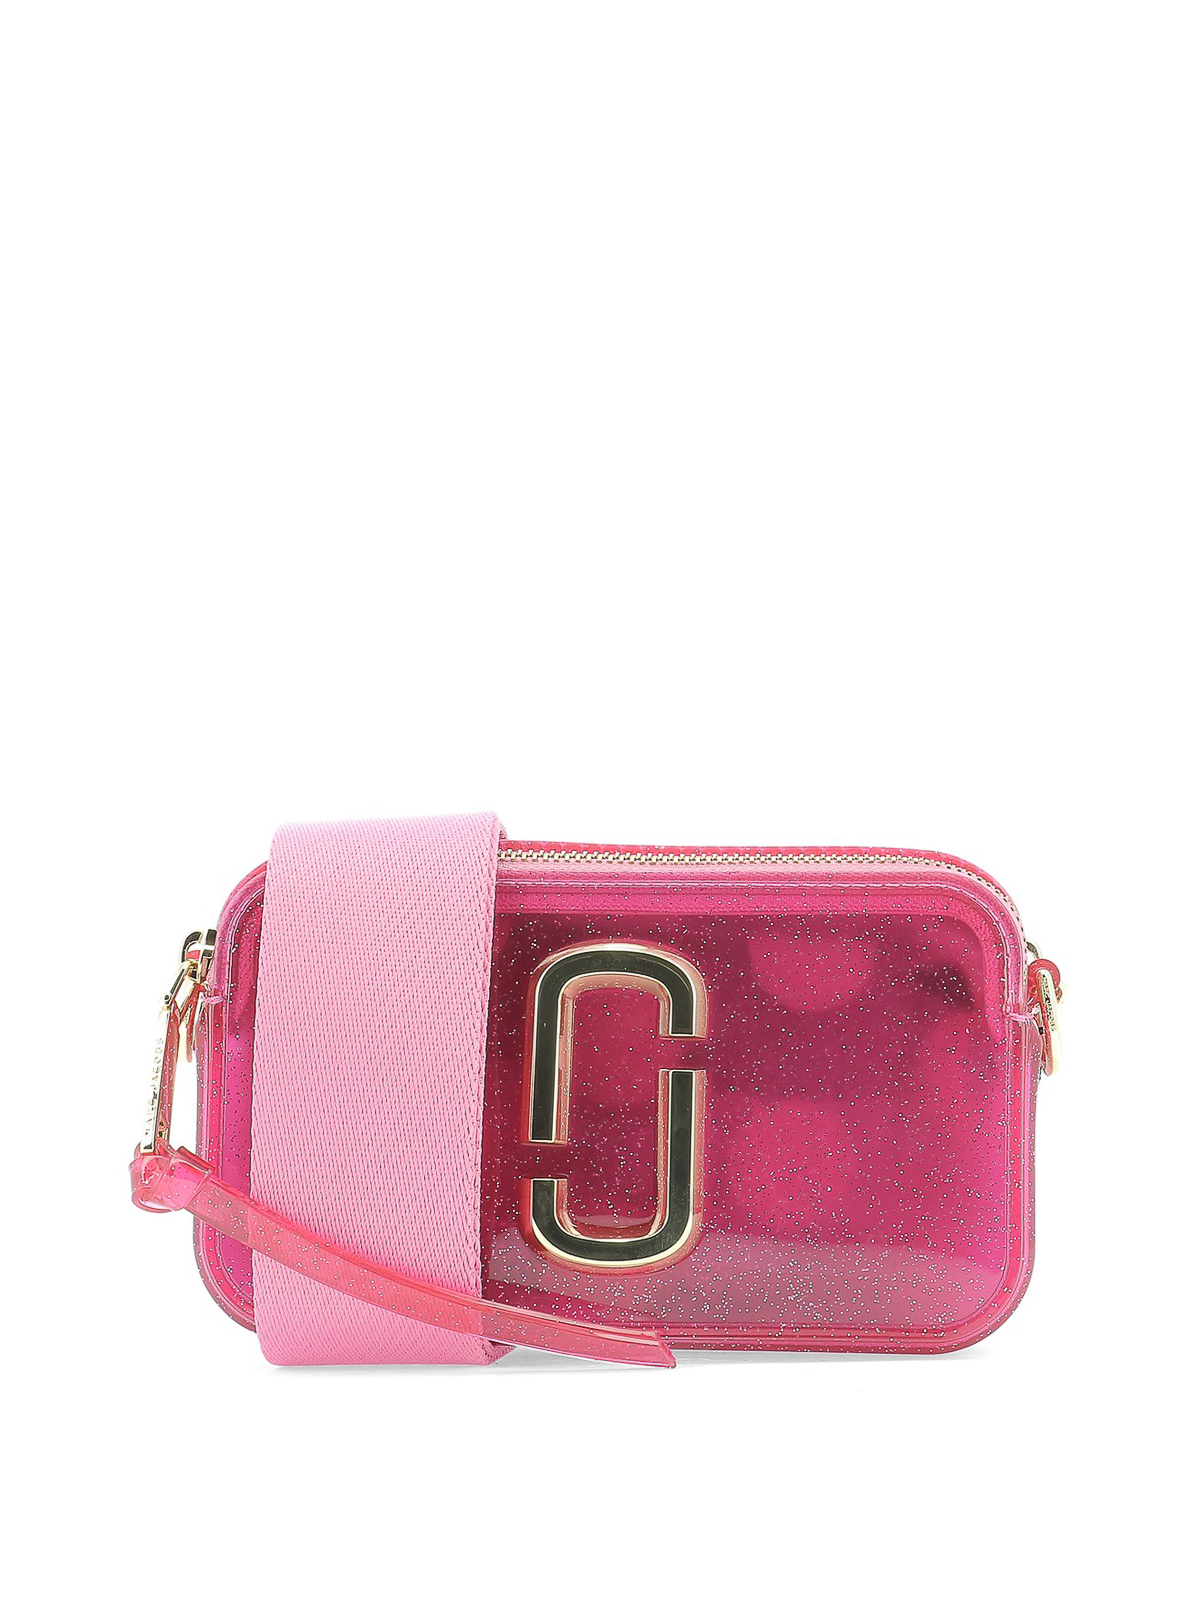 Marc Jacobs Snapshot Warning Label Strap Crossbody Bag in Pink